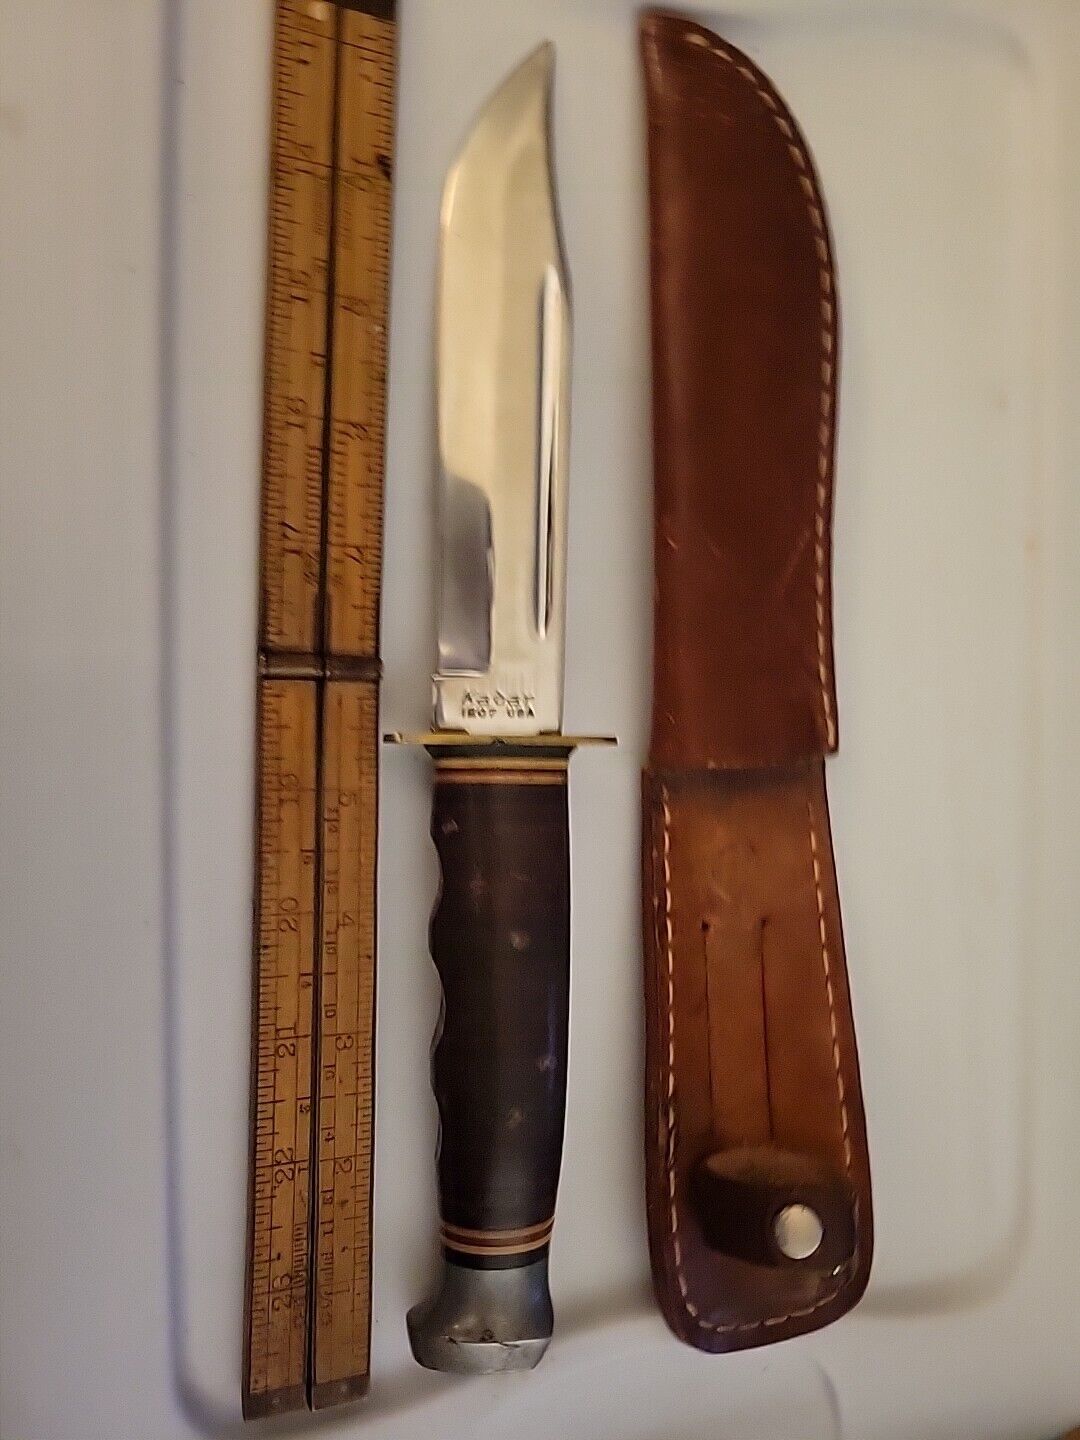  KA-BAR 1207 Fixed Blade Hunting Knife. w/Ka-bar New Leather Sheath. 